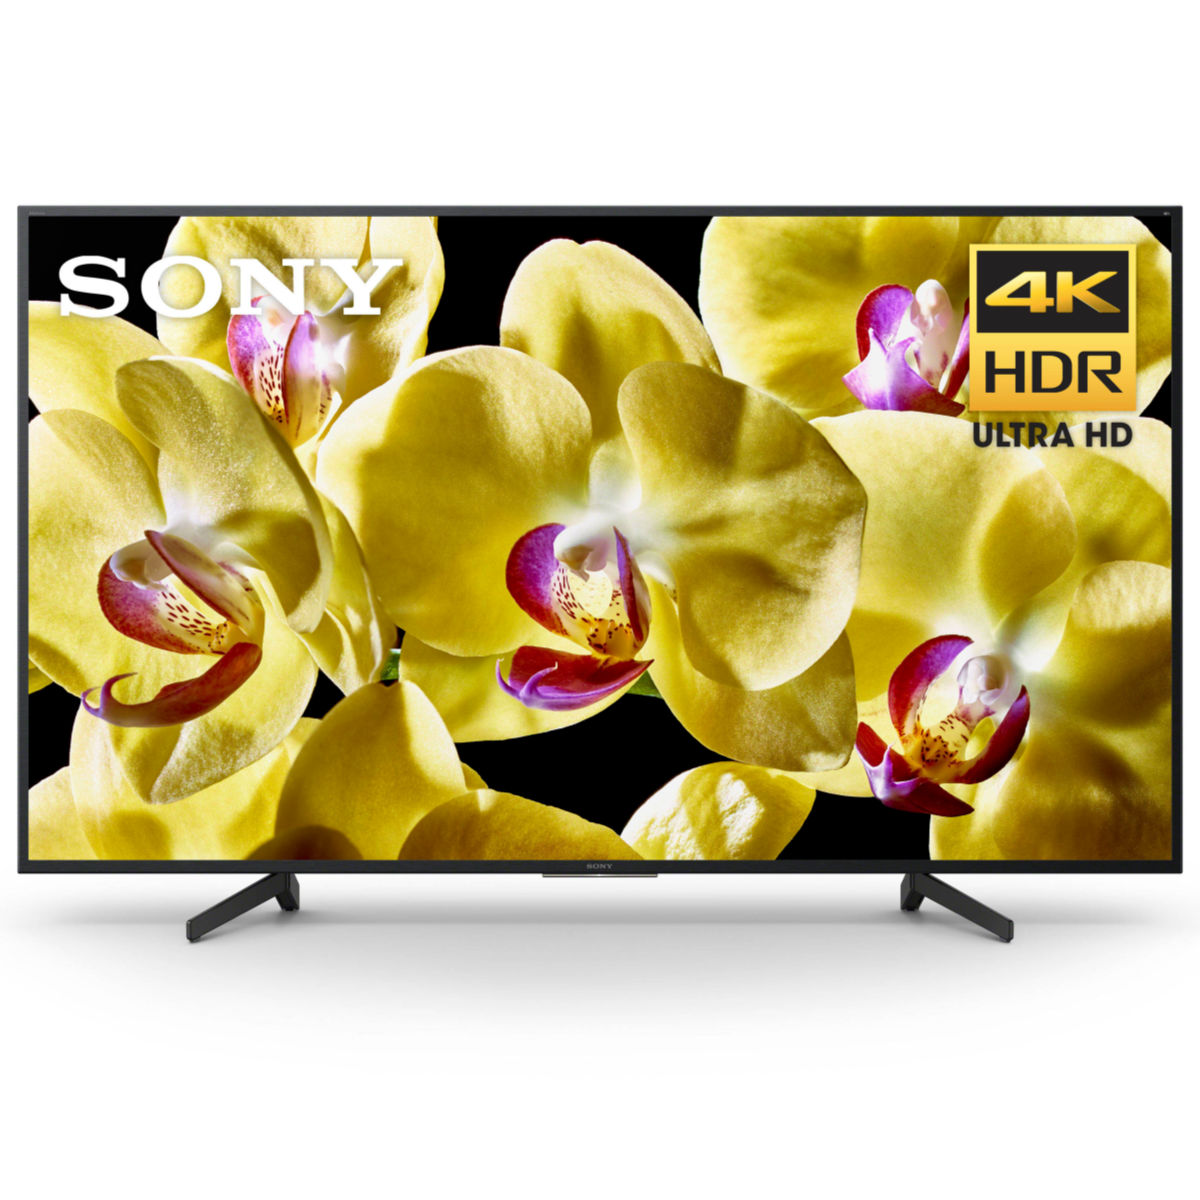 Sony XBR55X800G 55-Inch 4K Ultra Smart HDTV